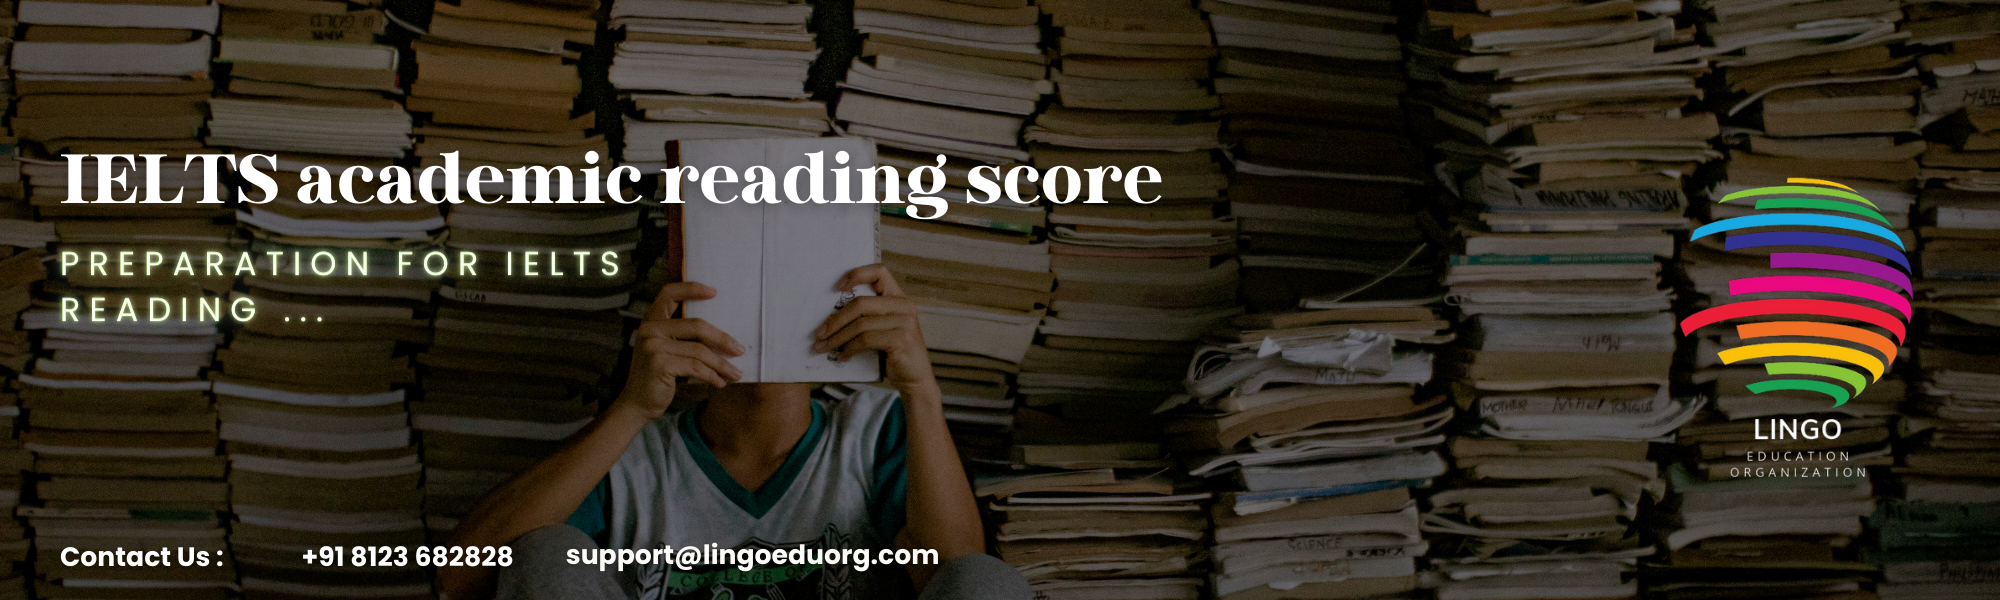 IELTS academic reading score
